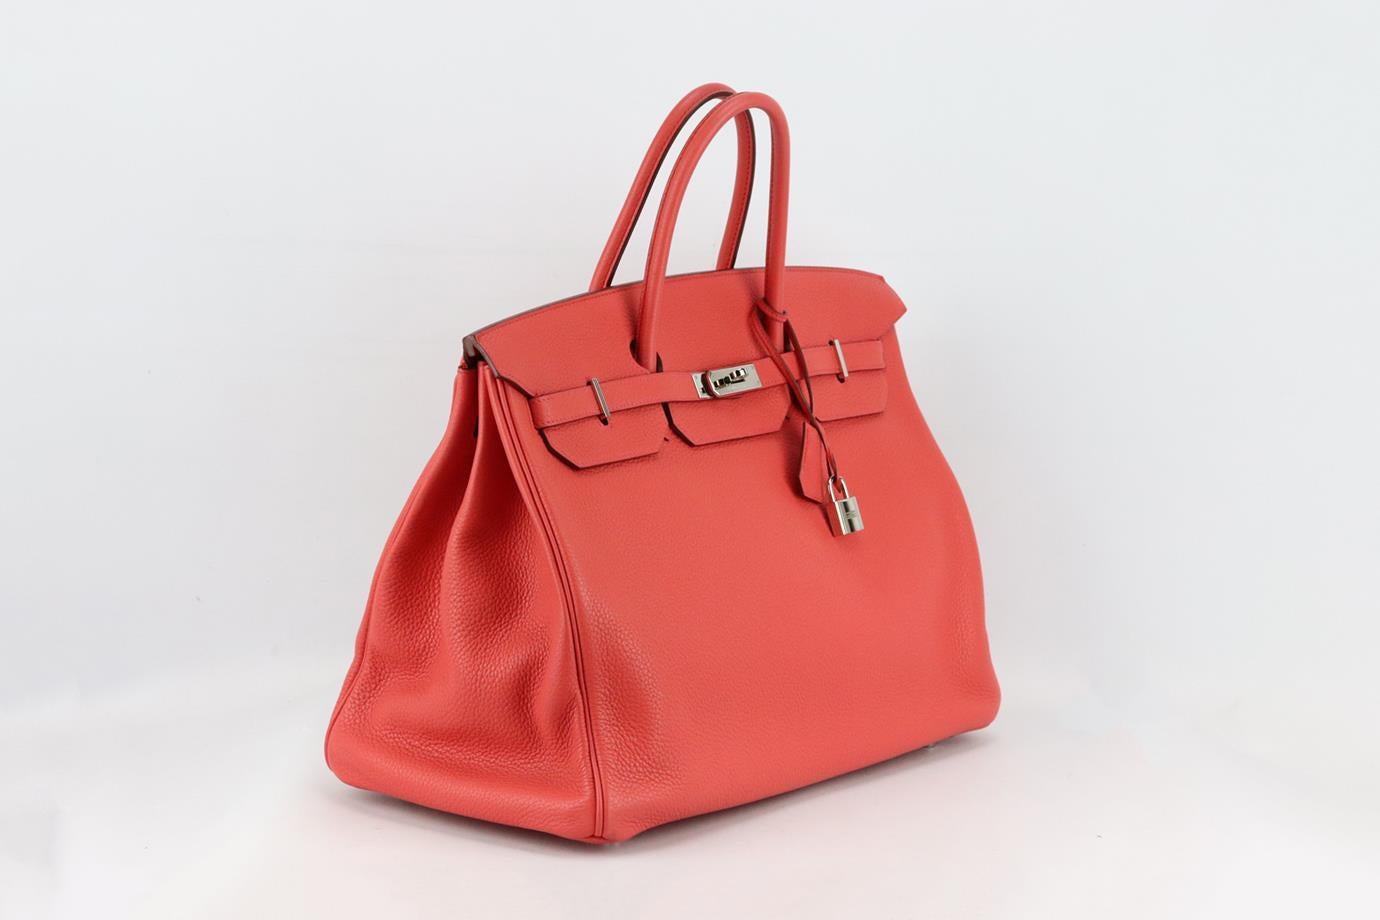 Hermès 2010 Birkin 40cm Togo Leather Bag For Sale 4